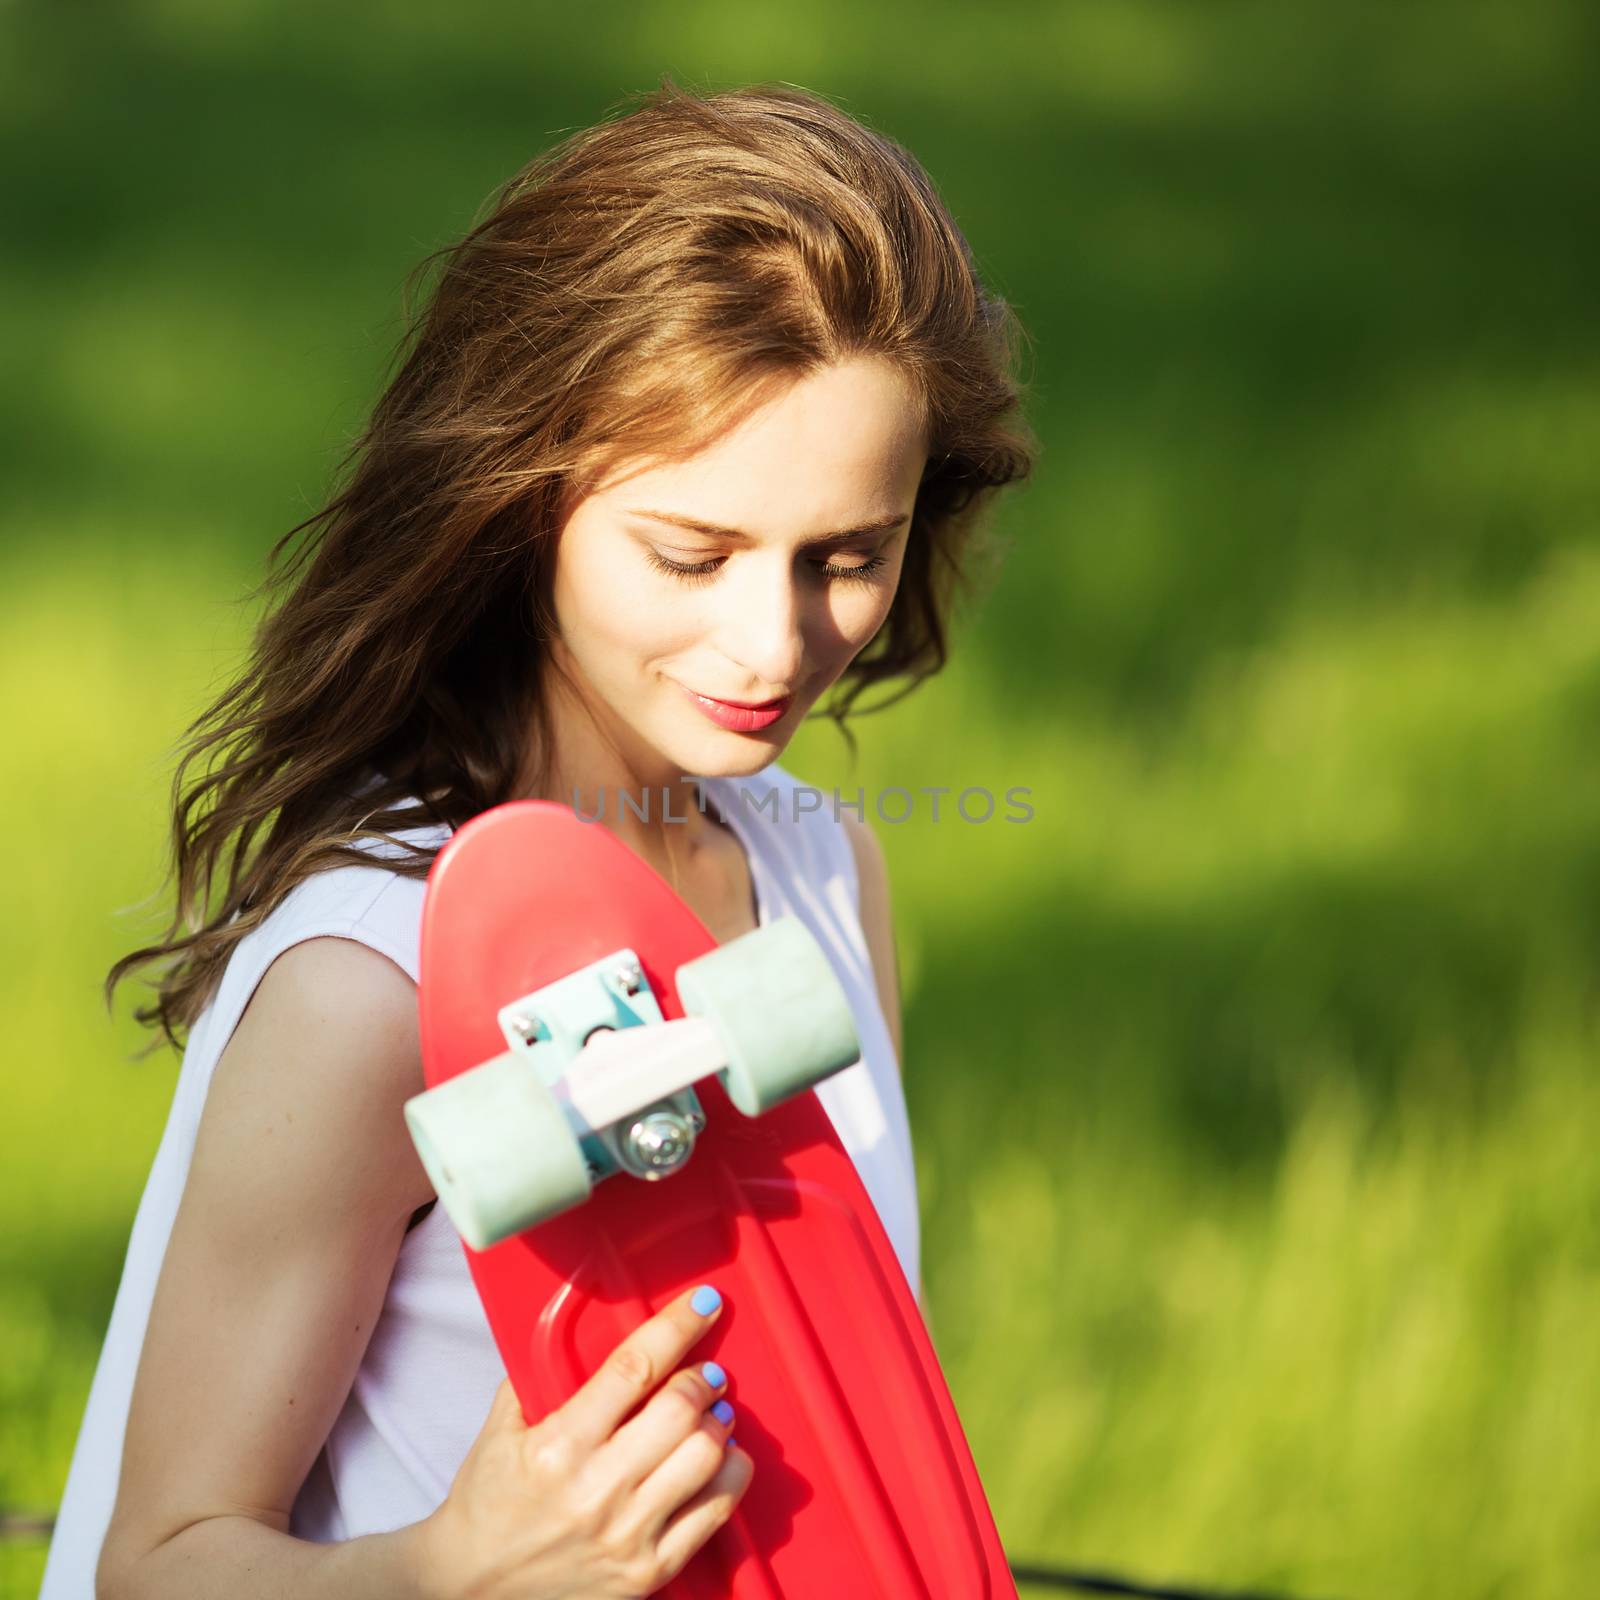 Girl holding a plastic skate board outdoors by natazhekova